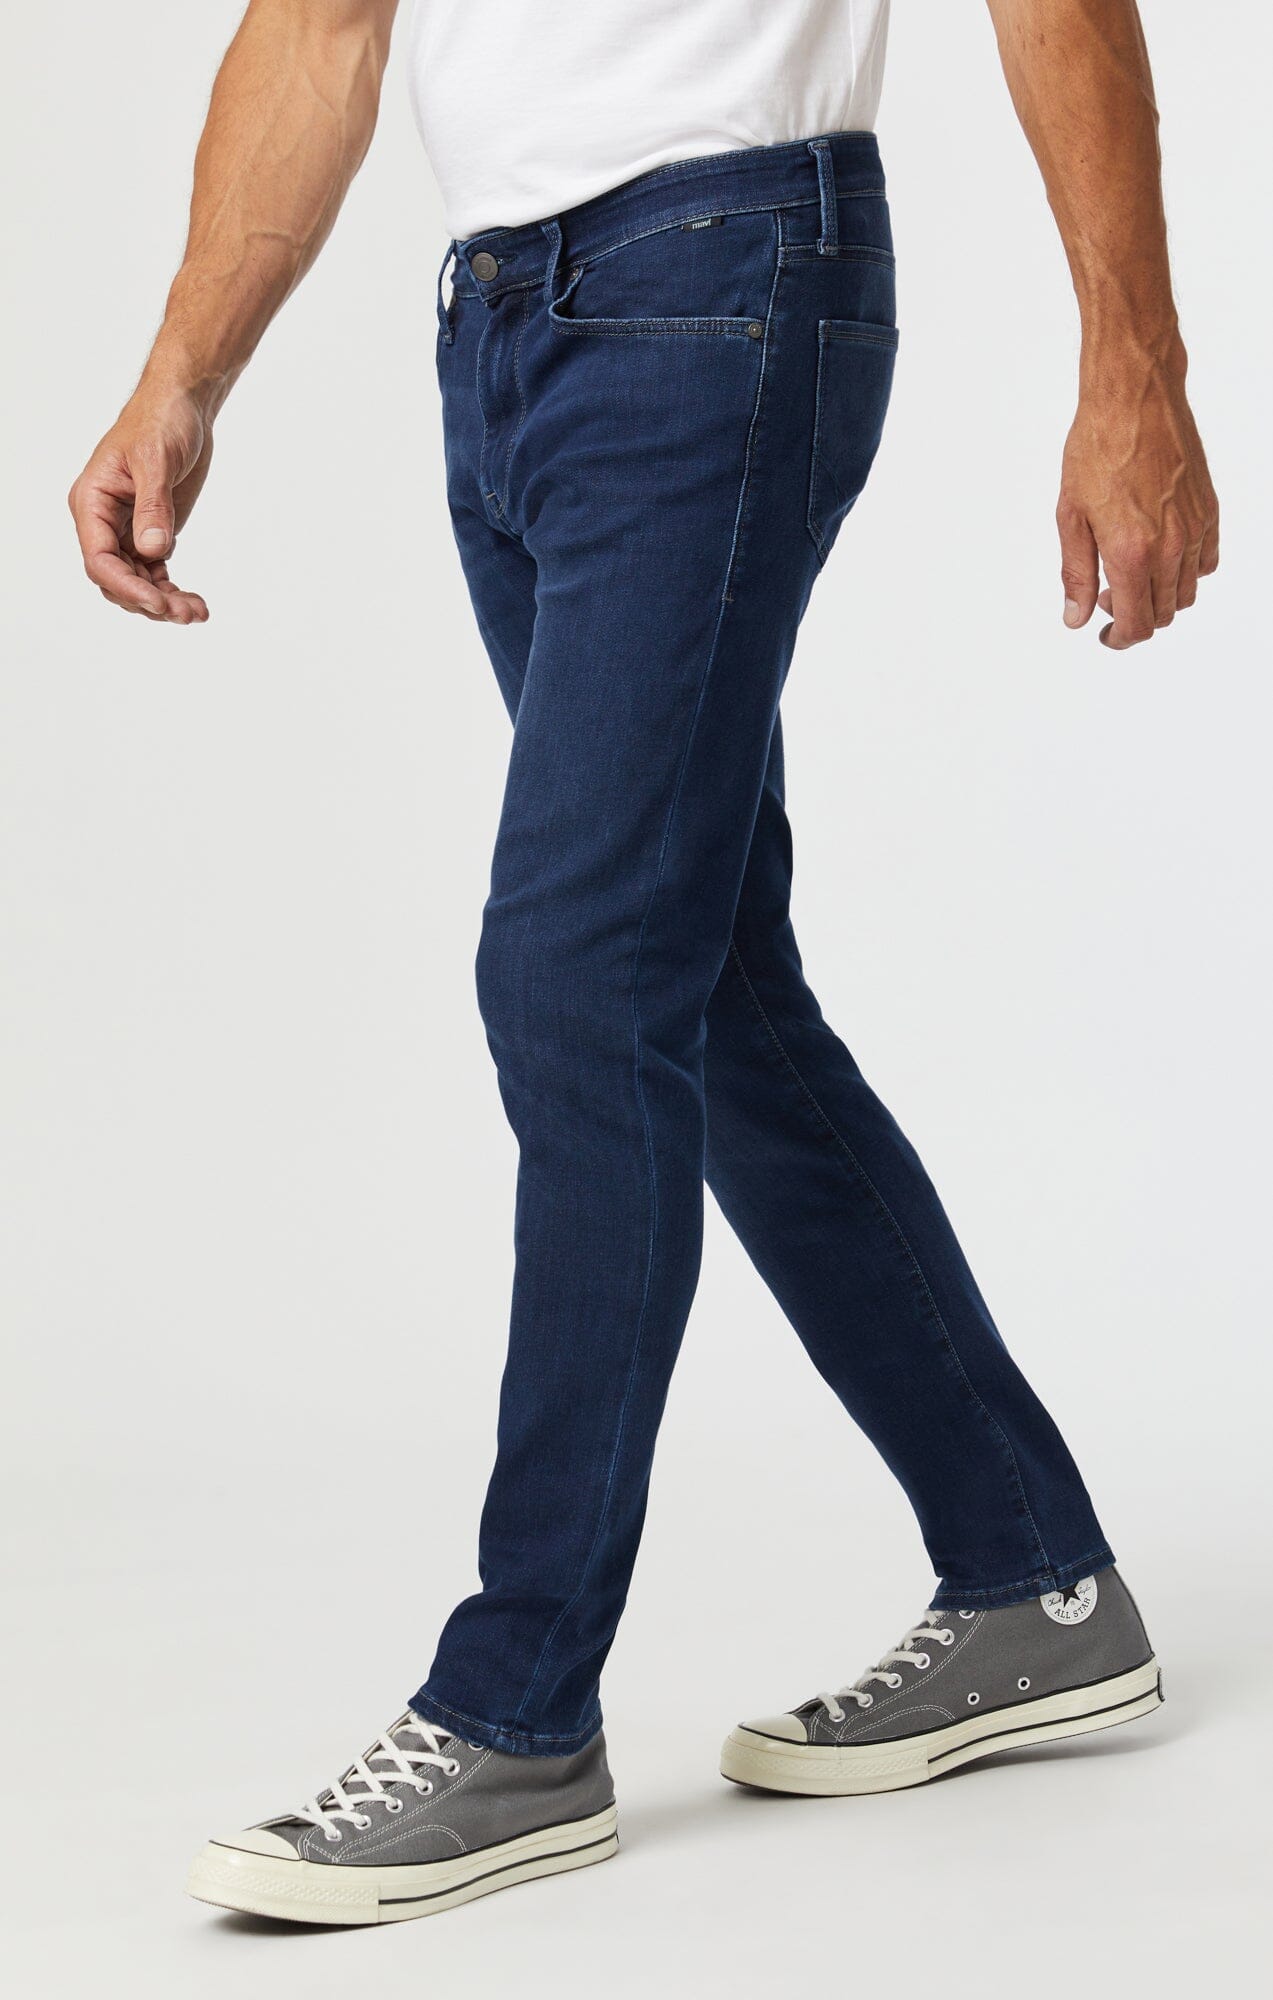 blue skinny jeans for boys